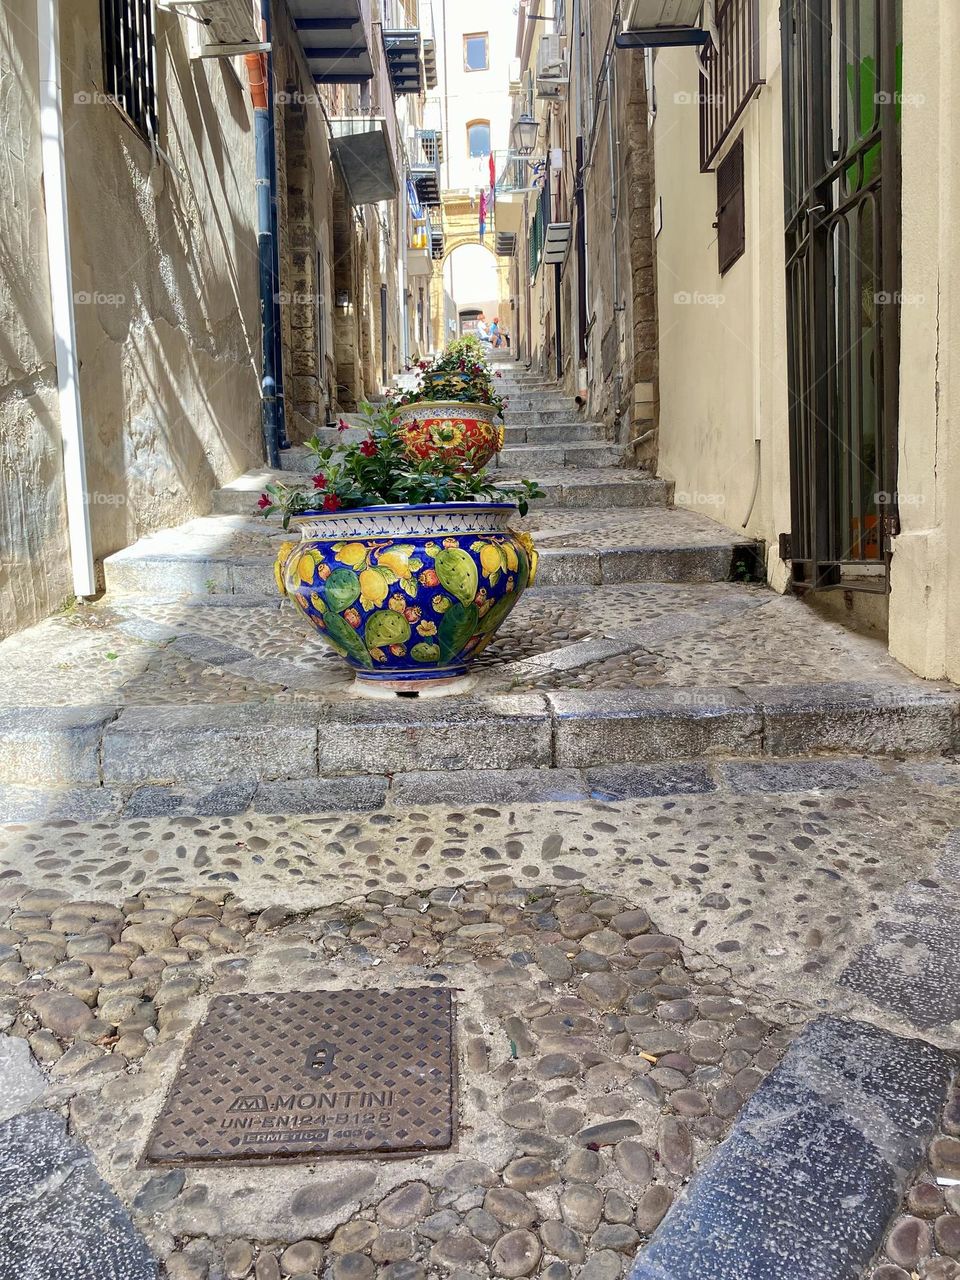 Sicily’s street